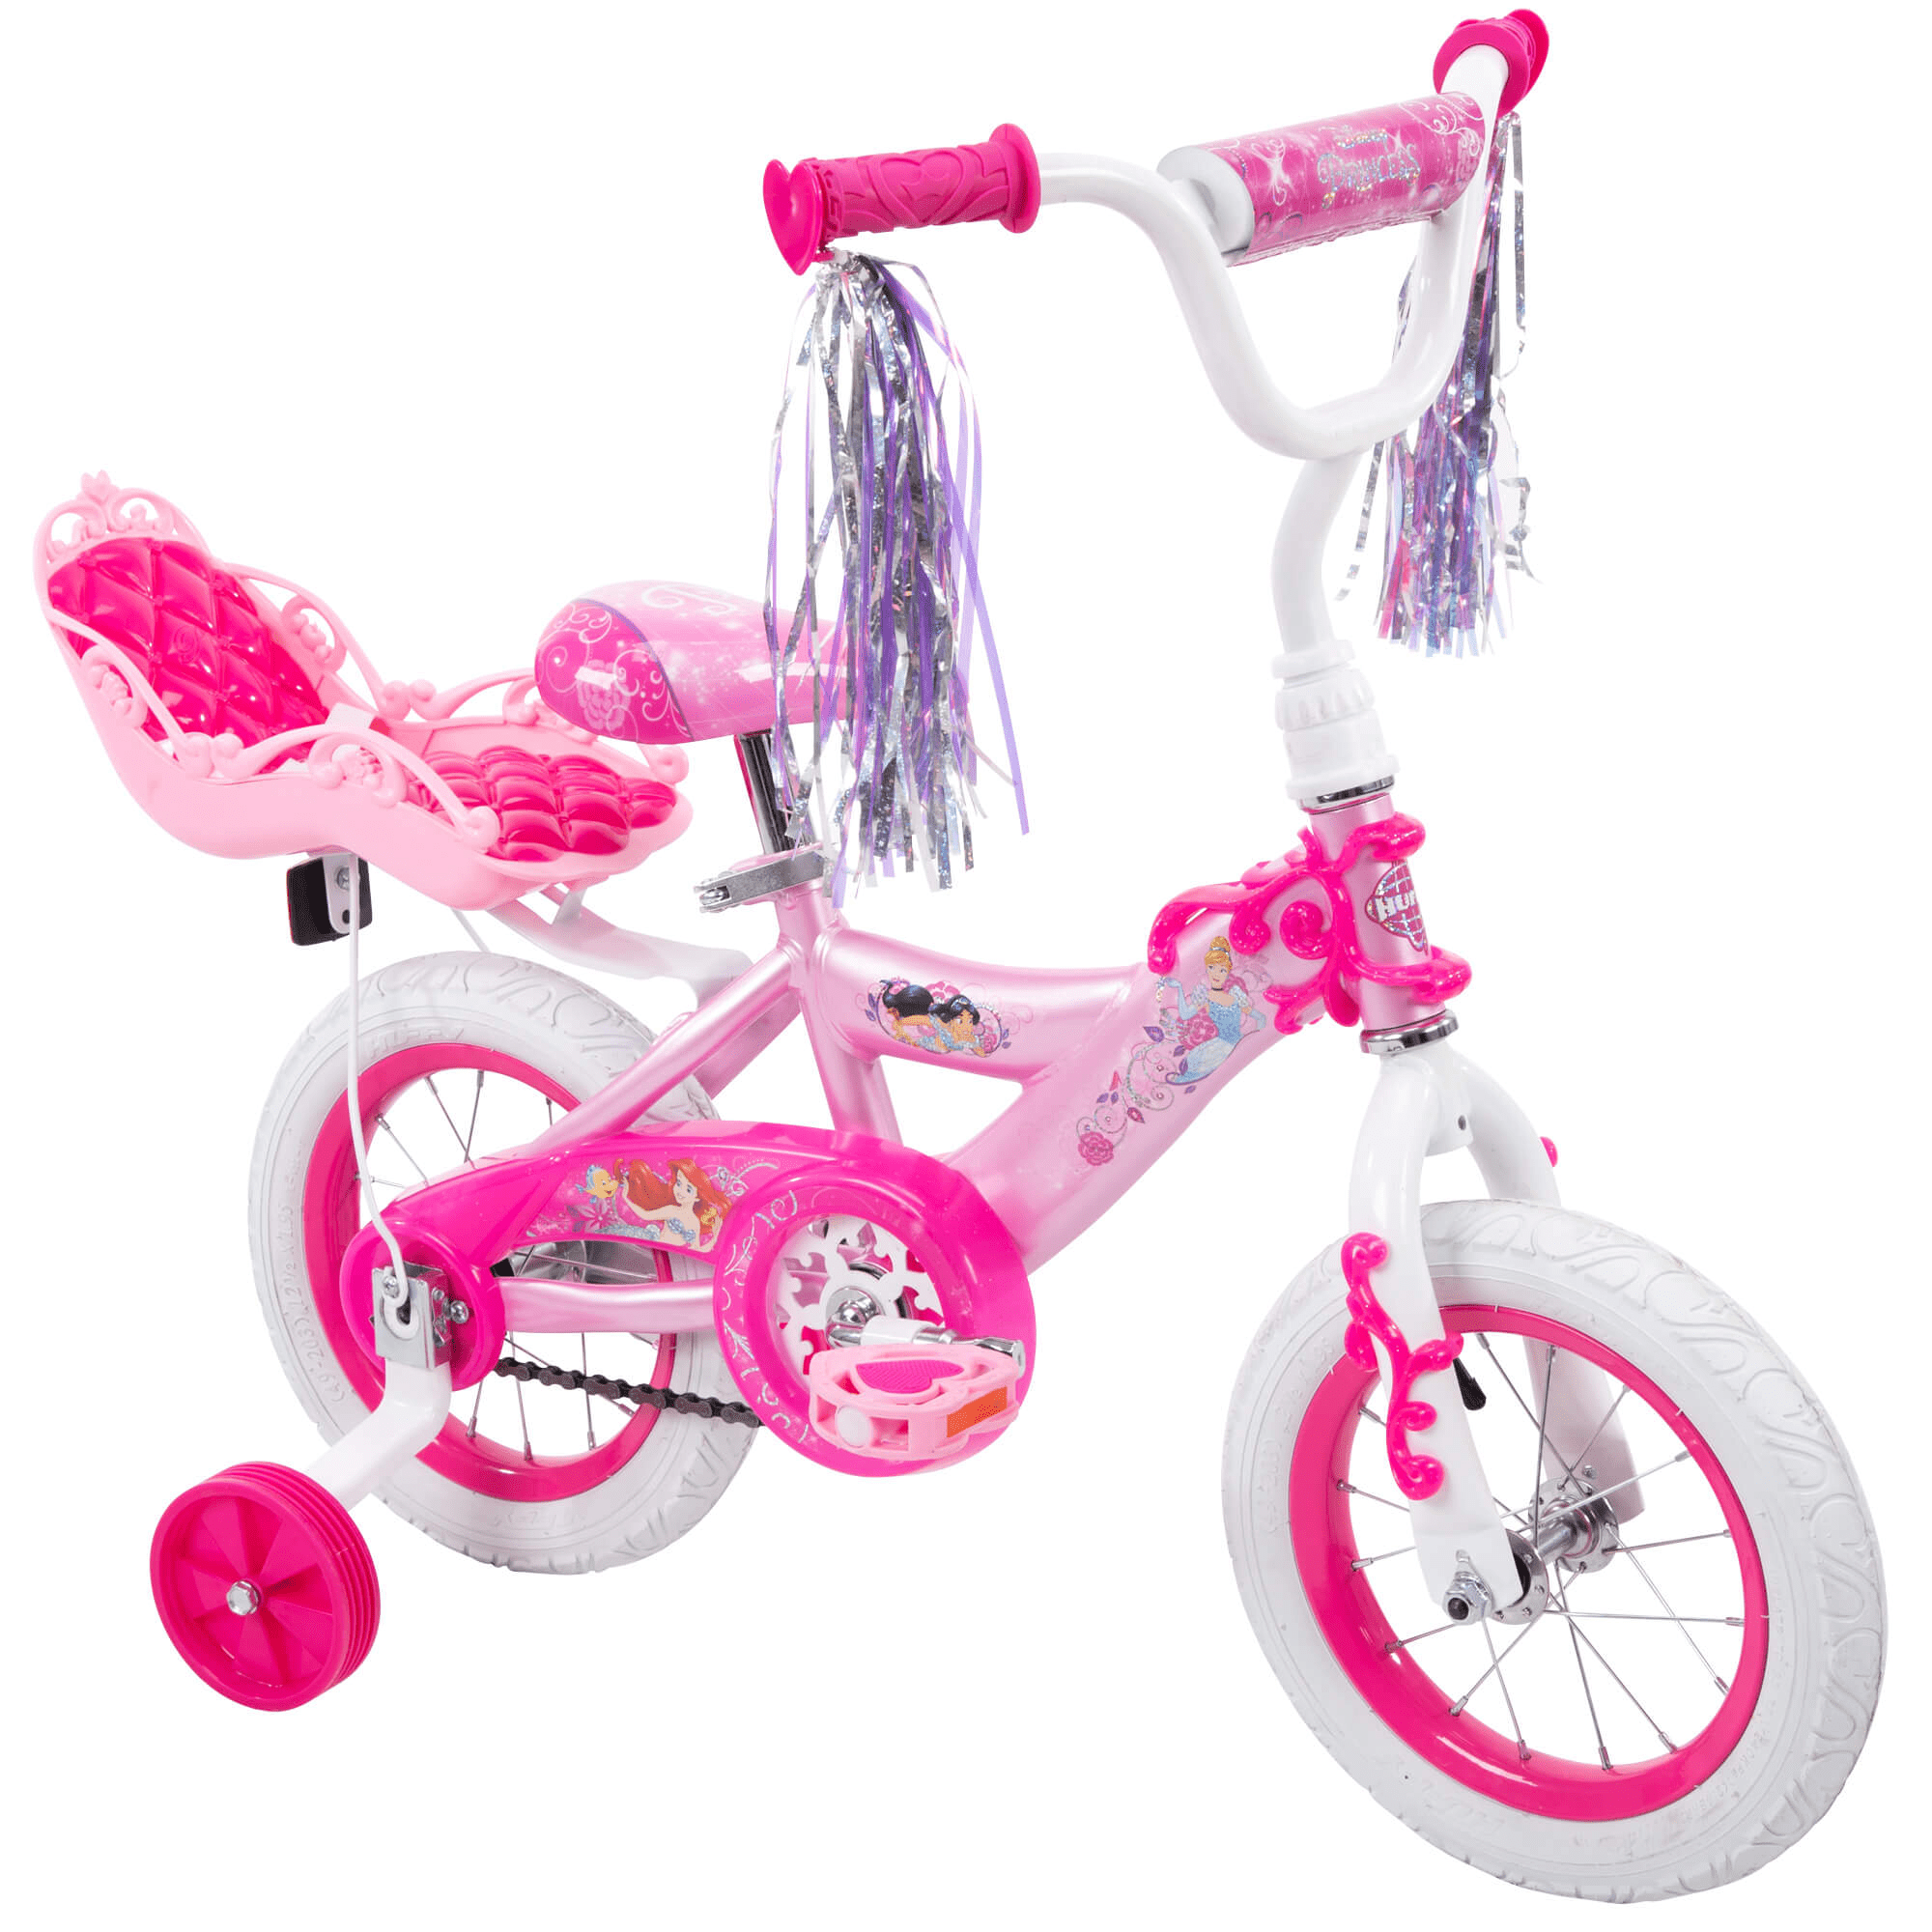 Disney Princess Girls' 12" Bike with Doll Carrier by Huffy BIGSALE+FREESHIP 